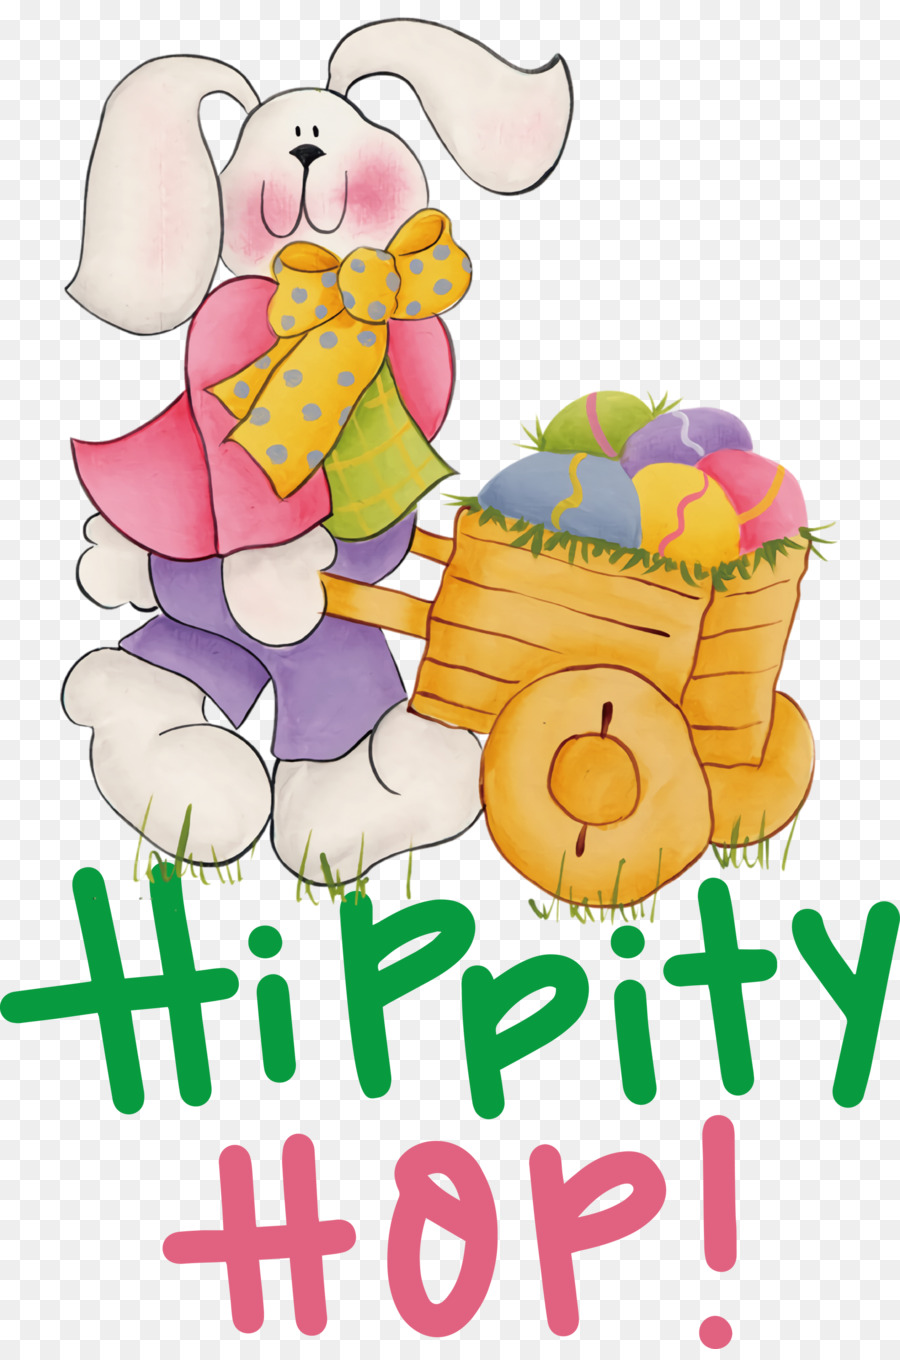 Happy Easter Hippity Hop - 